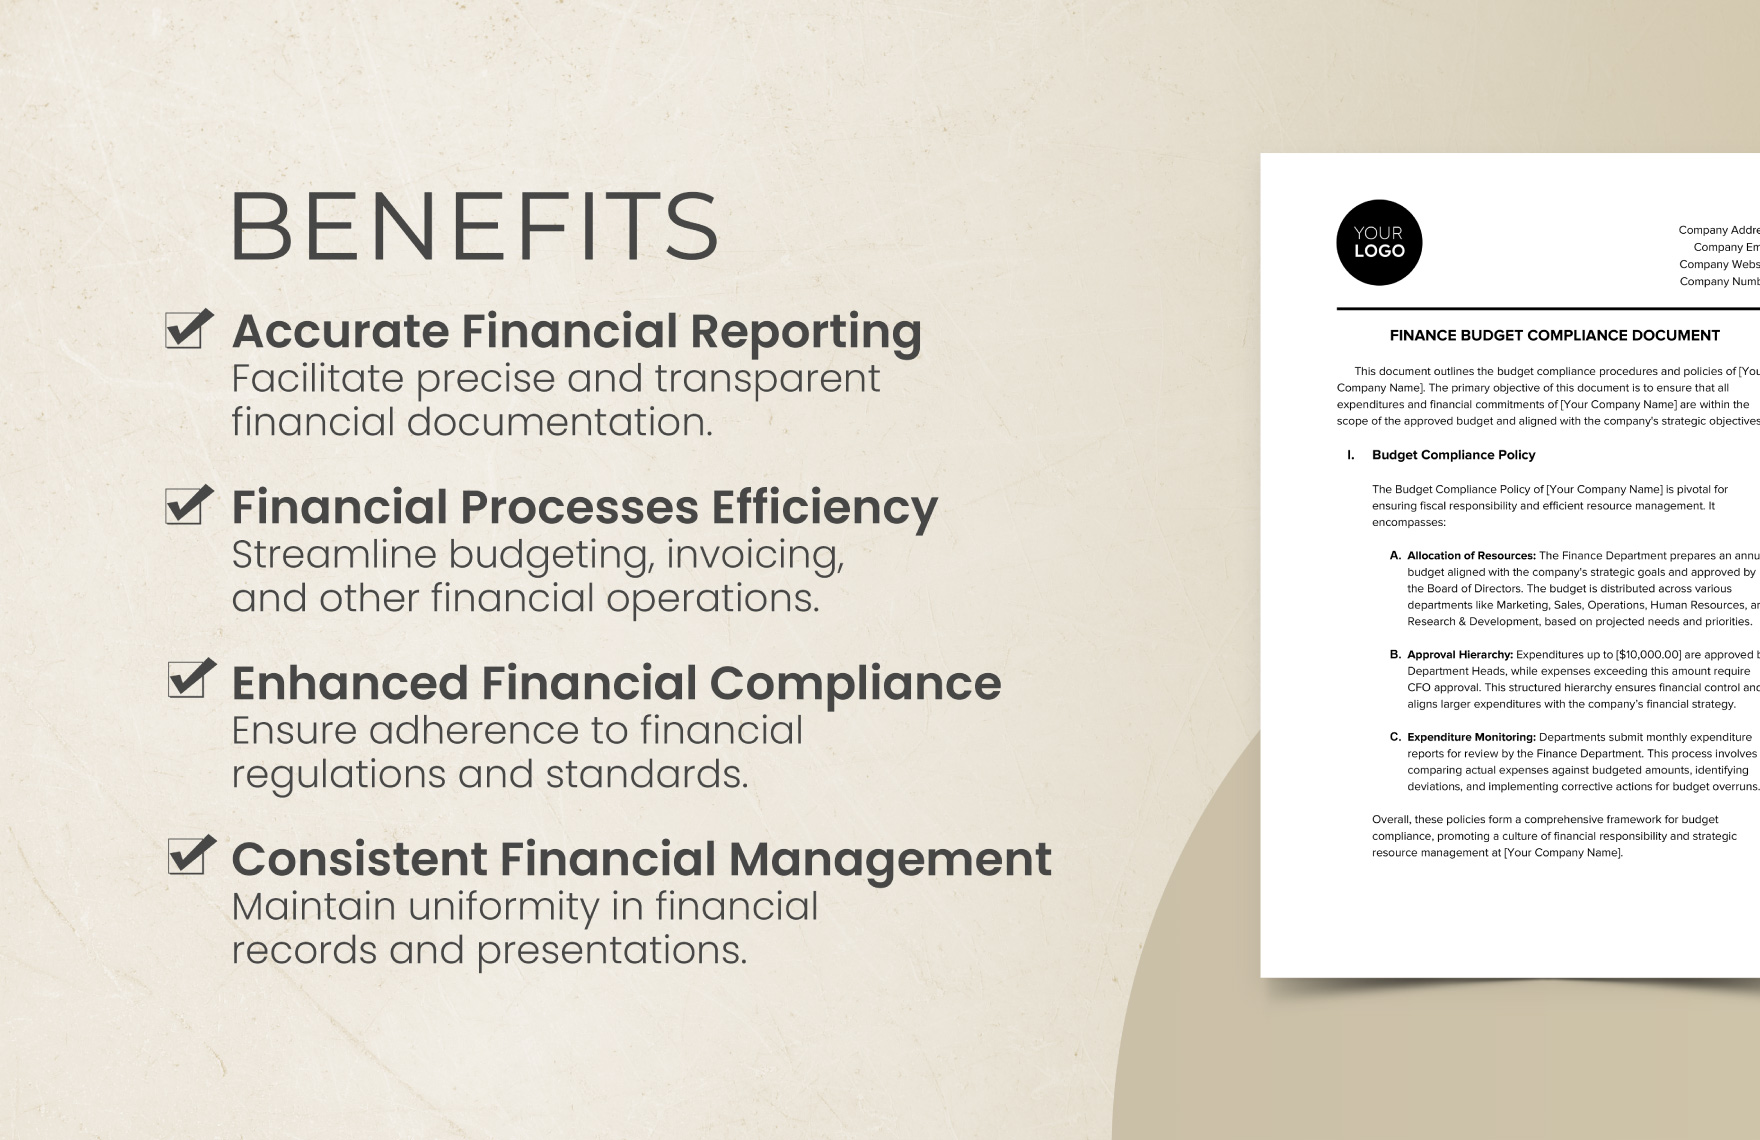 Finance Budget Compliance Document Template